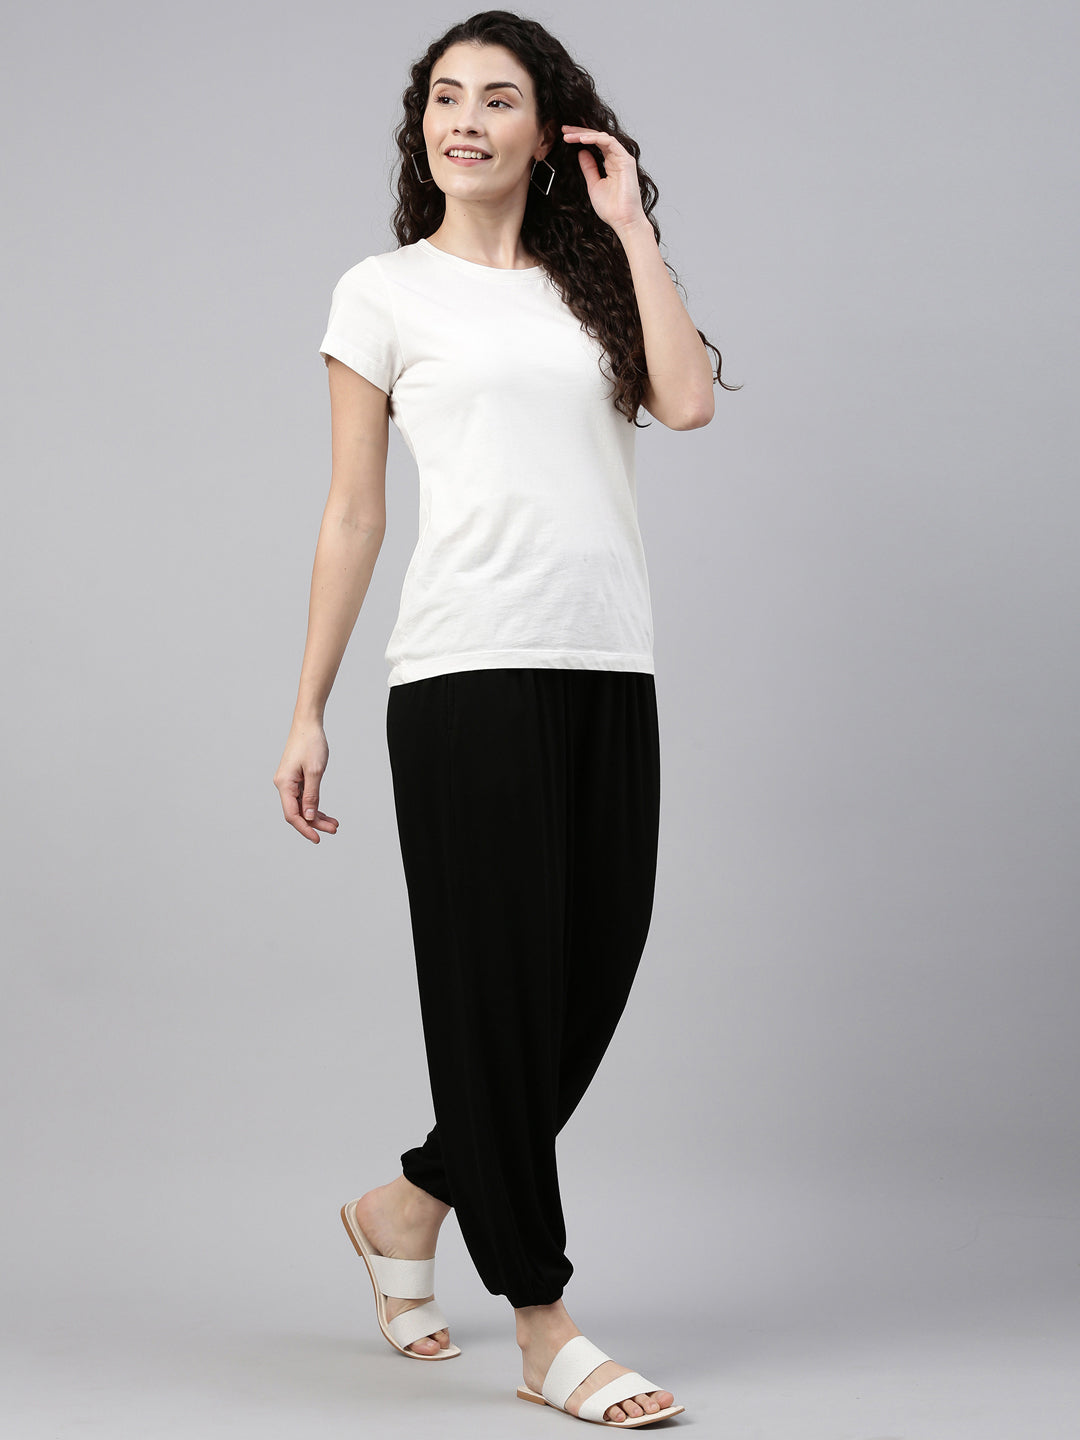 Dual Color Casual Wear Regular Fit Skin Friendly Ladies Printed Harem Pants  at Best Price in Delhi  Vk Enterprises